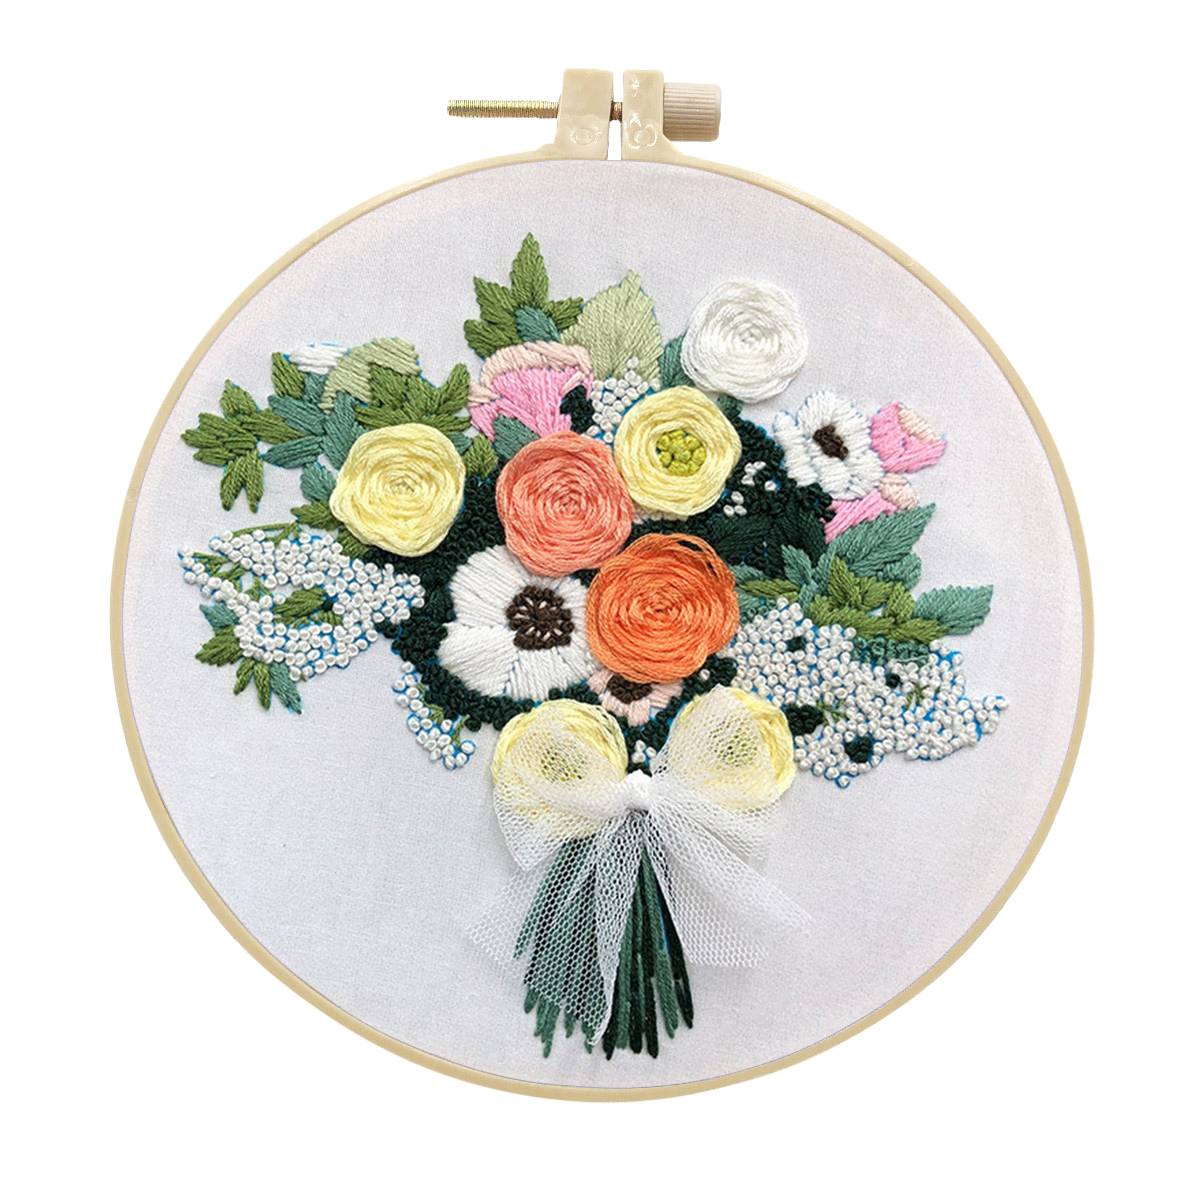 DIY Handmade Embroidery Kit Craft Cross Stitch Kits Beginner - Vivid flowers Bouquet Pattern